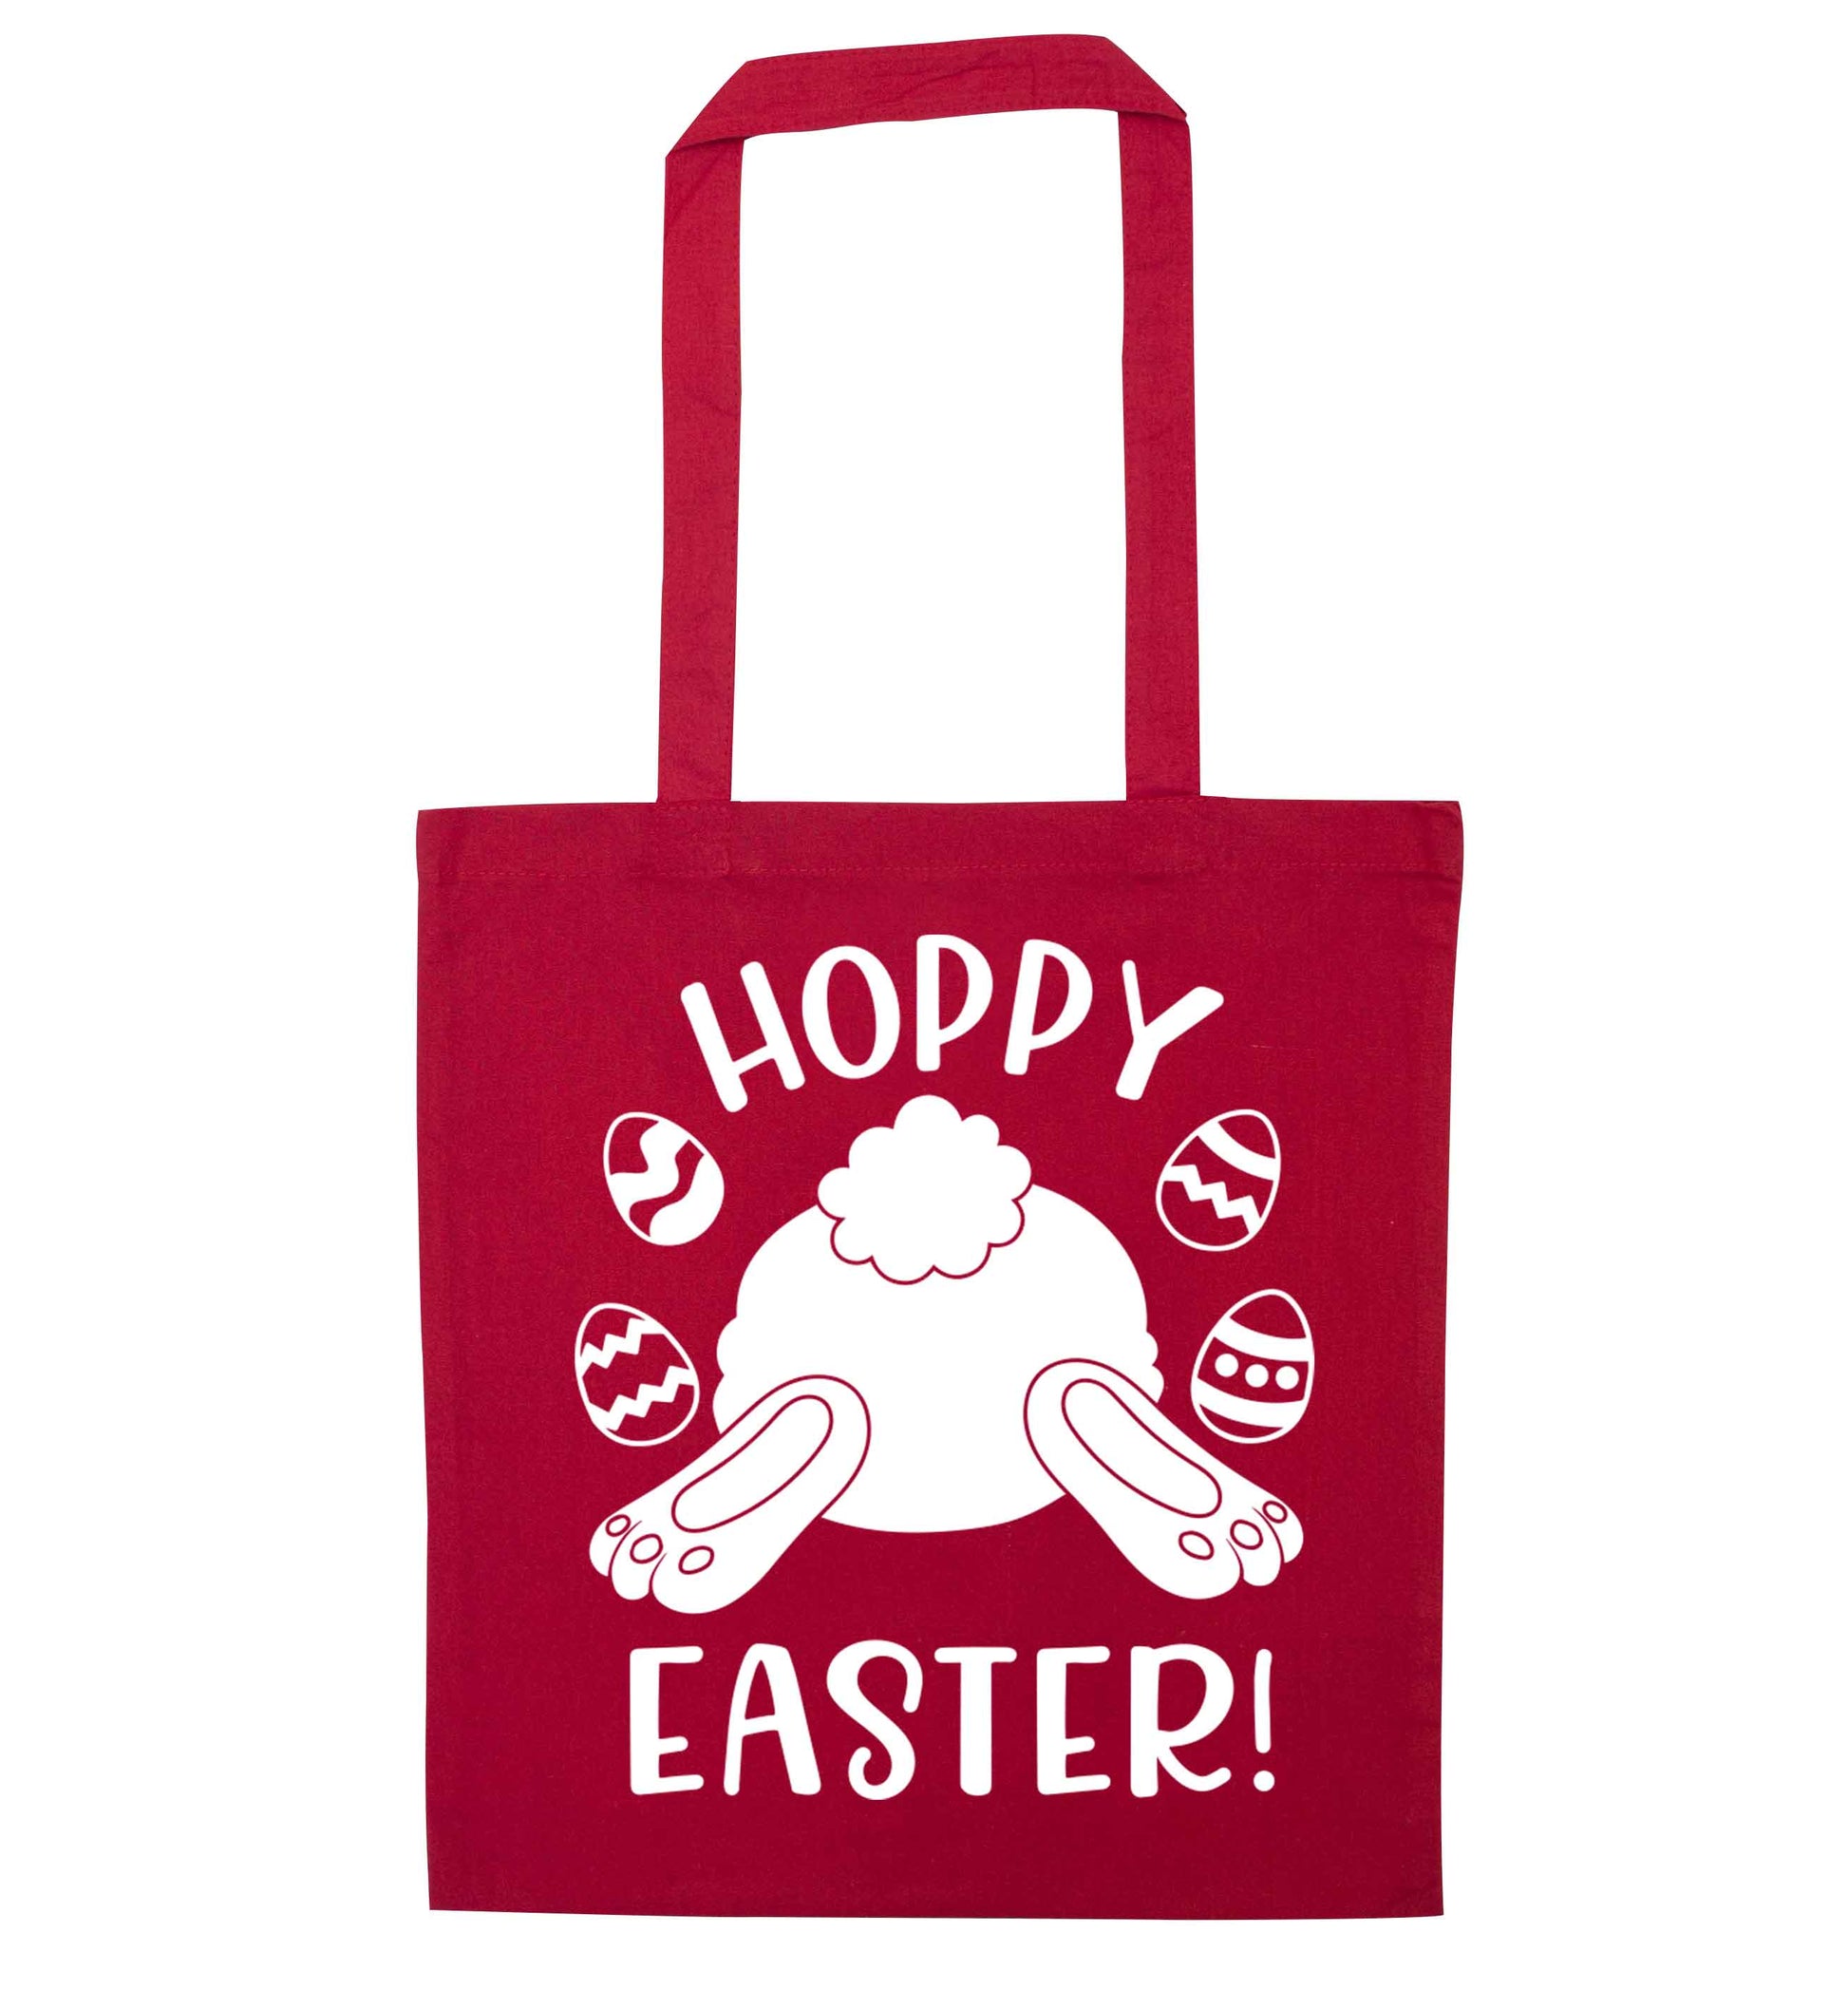 Hoppy Easter red tote bag